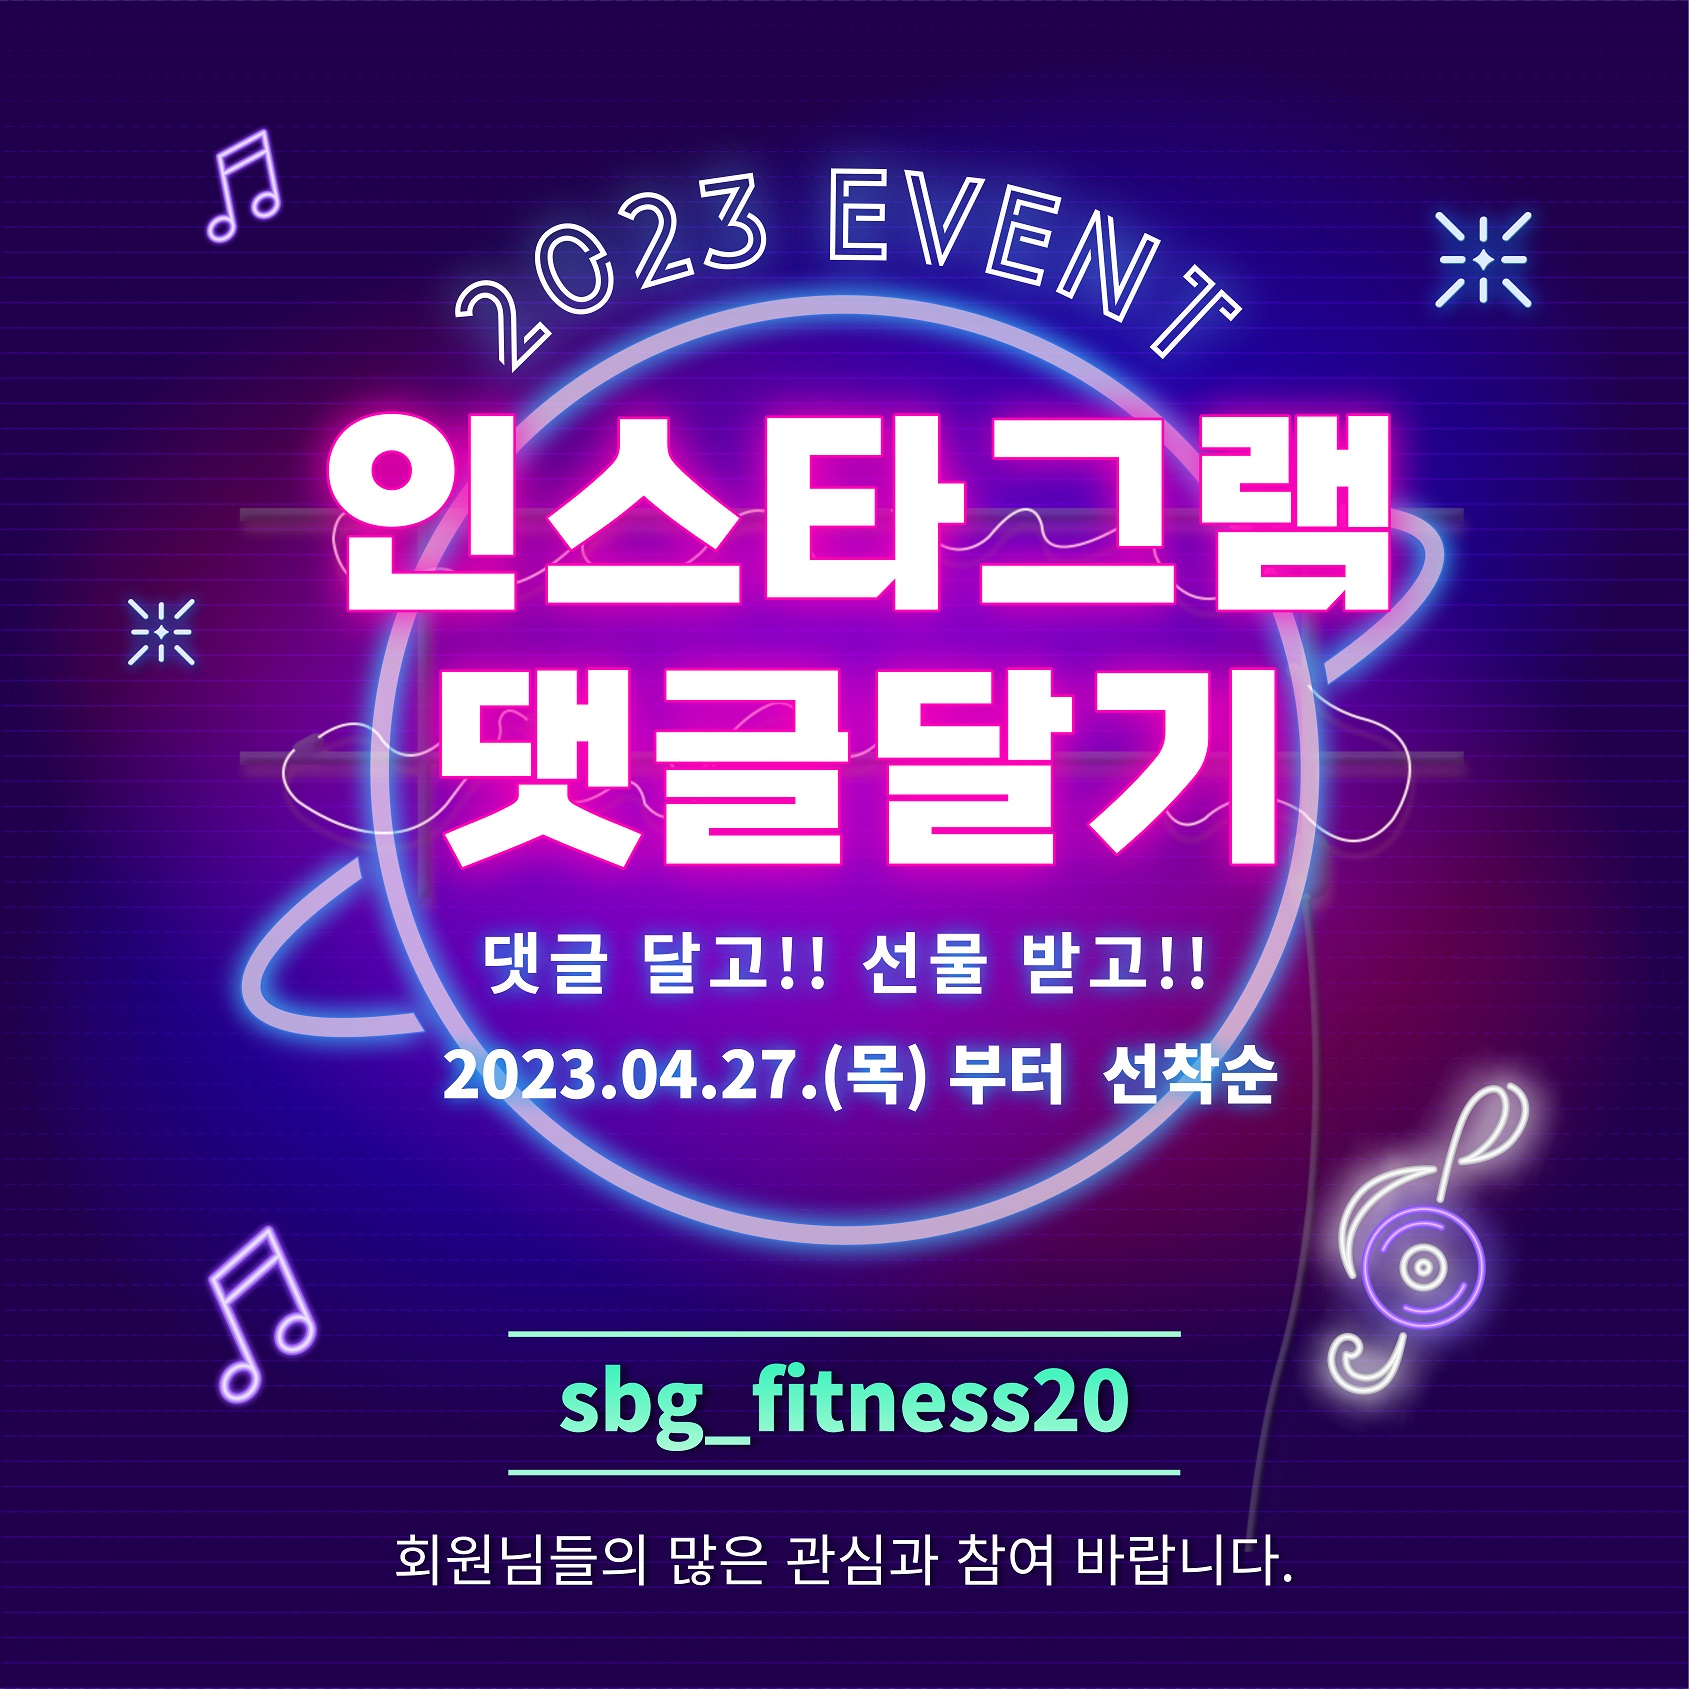 2023 EVENT
인스타그램 댓글달기
댓글 달고!! 선물 받고!!
2023.04.27.(목)부터 선착순
sbg_fitness20
회원님들의 많은 관심과 참여 바랍니다.